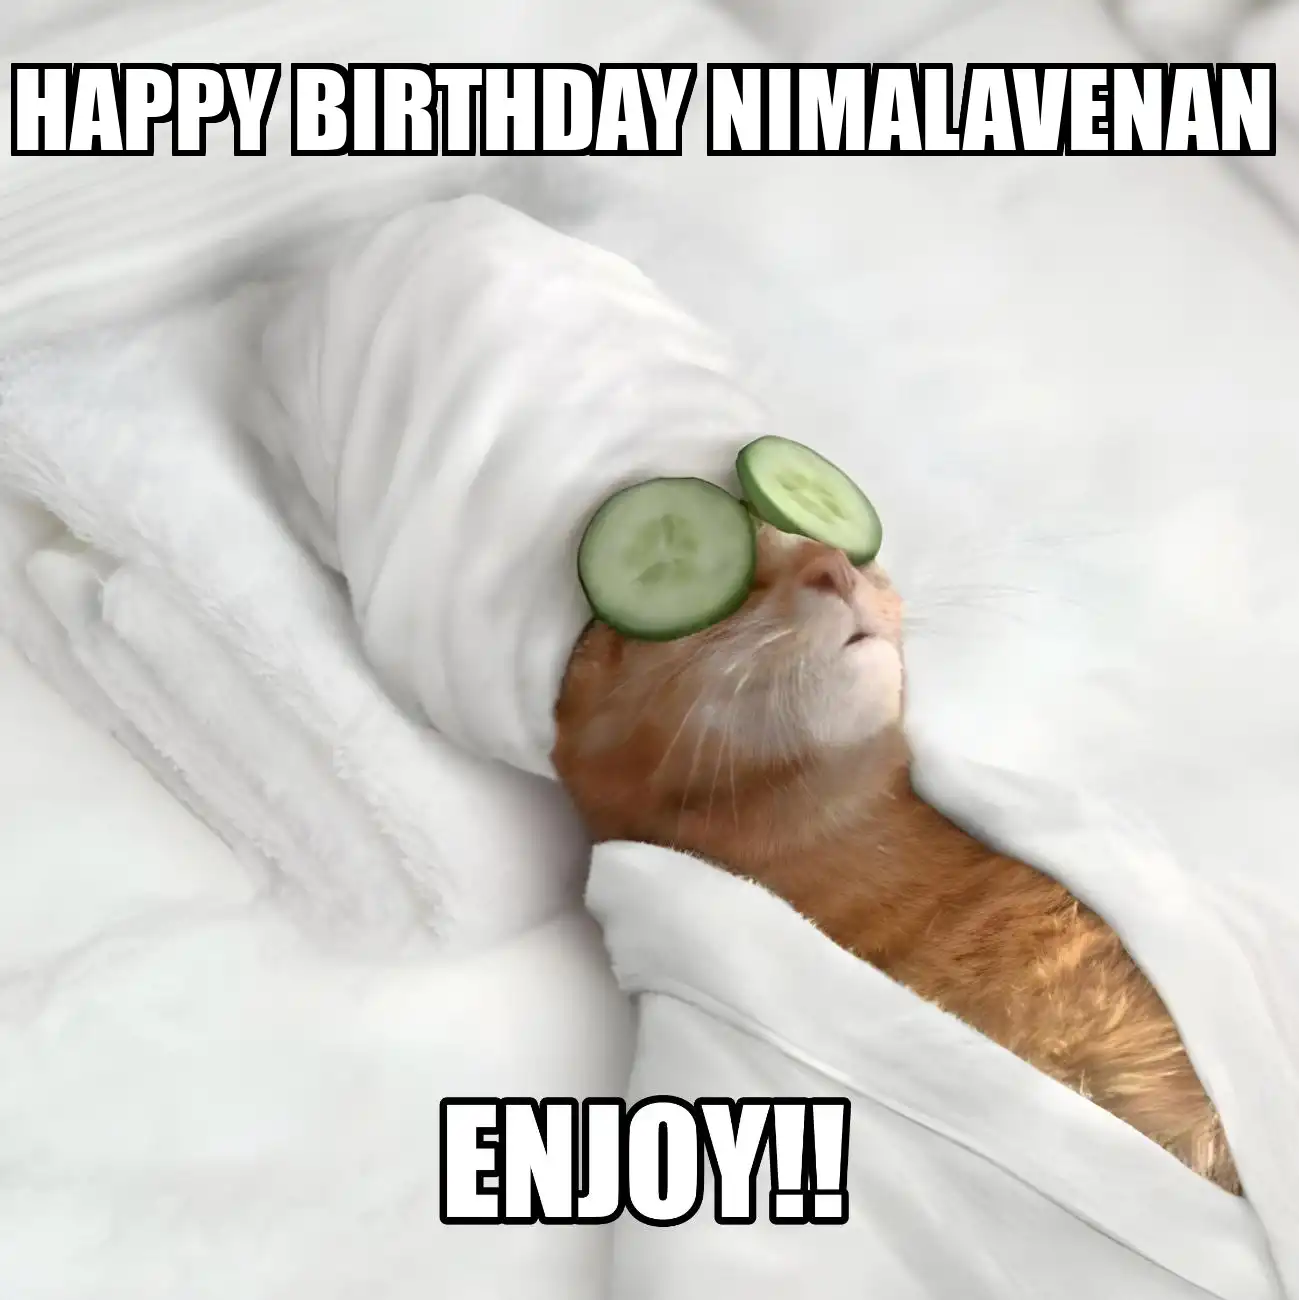 Happy Birthday Nimalavenan Enjoy Cat Meme